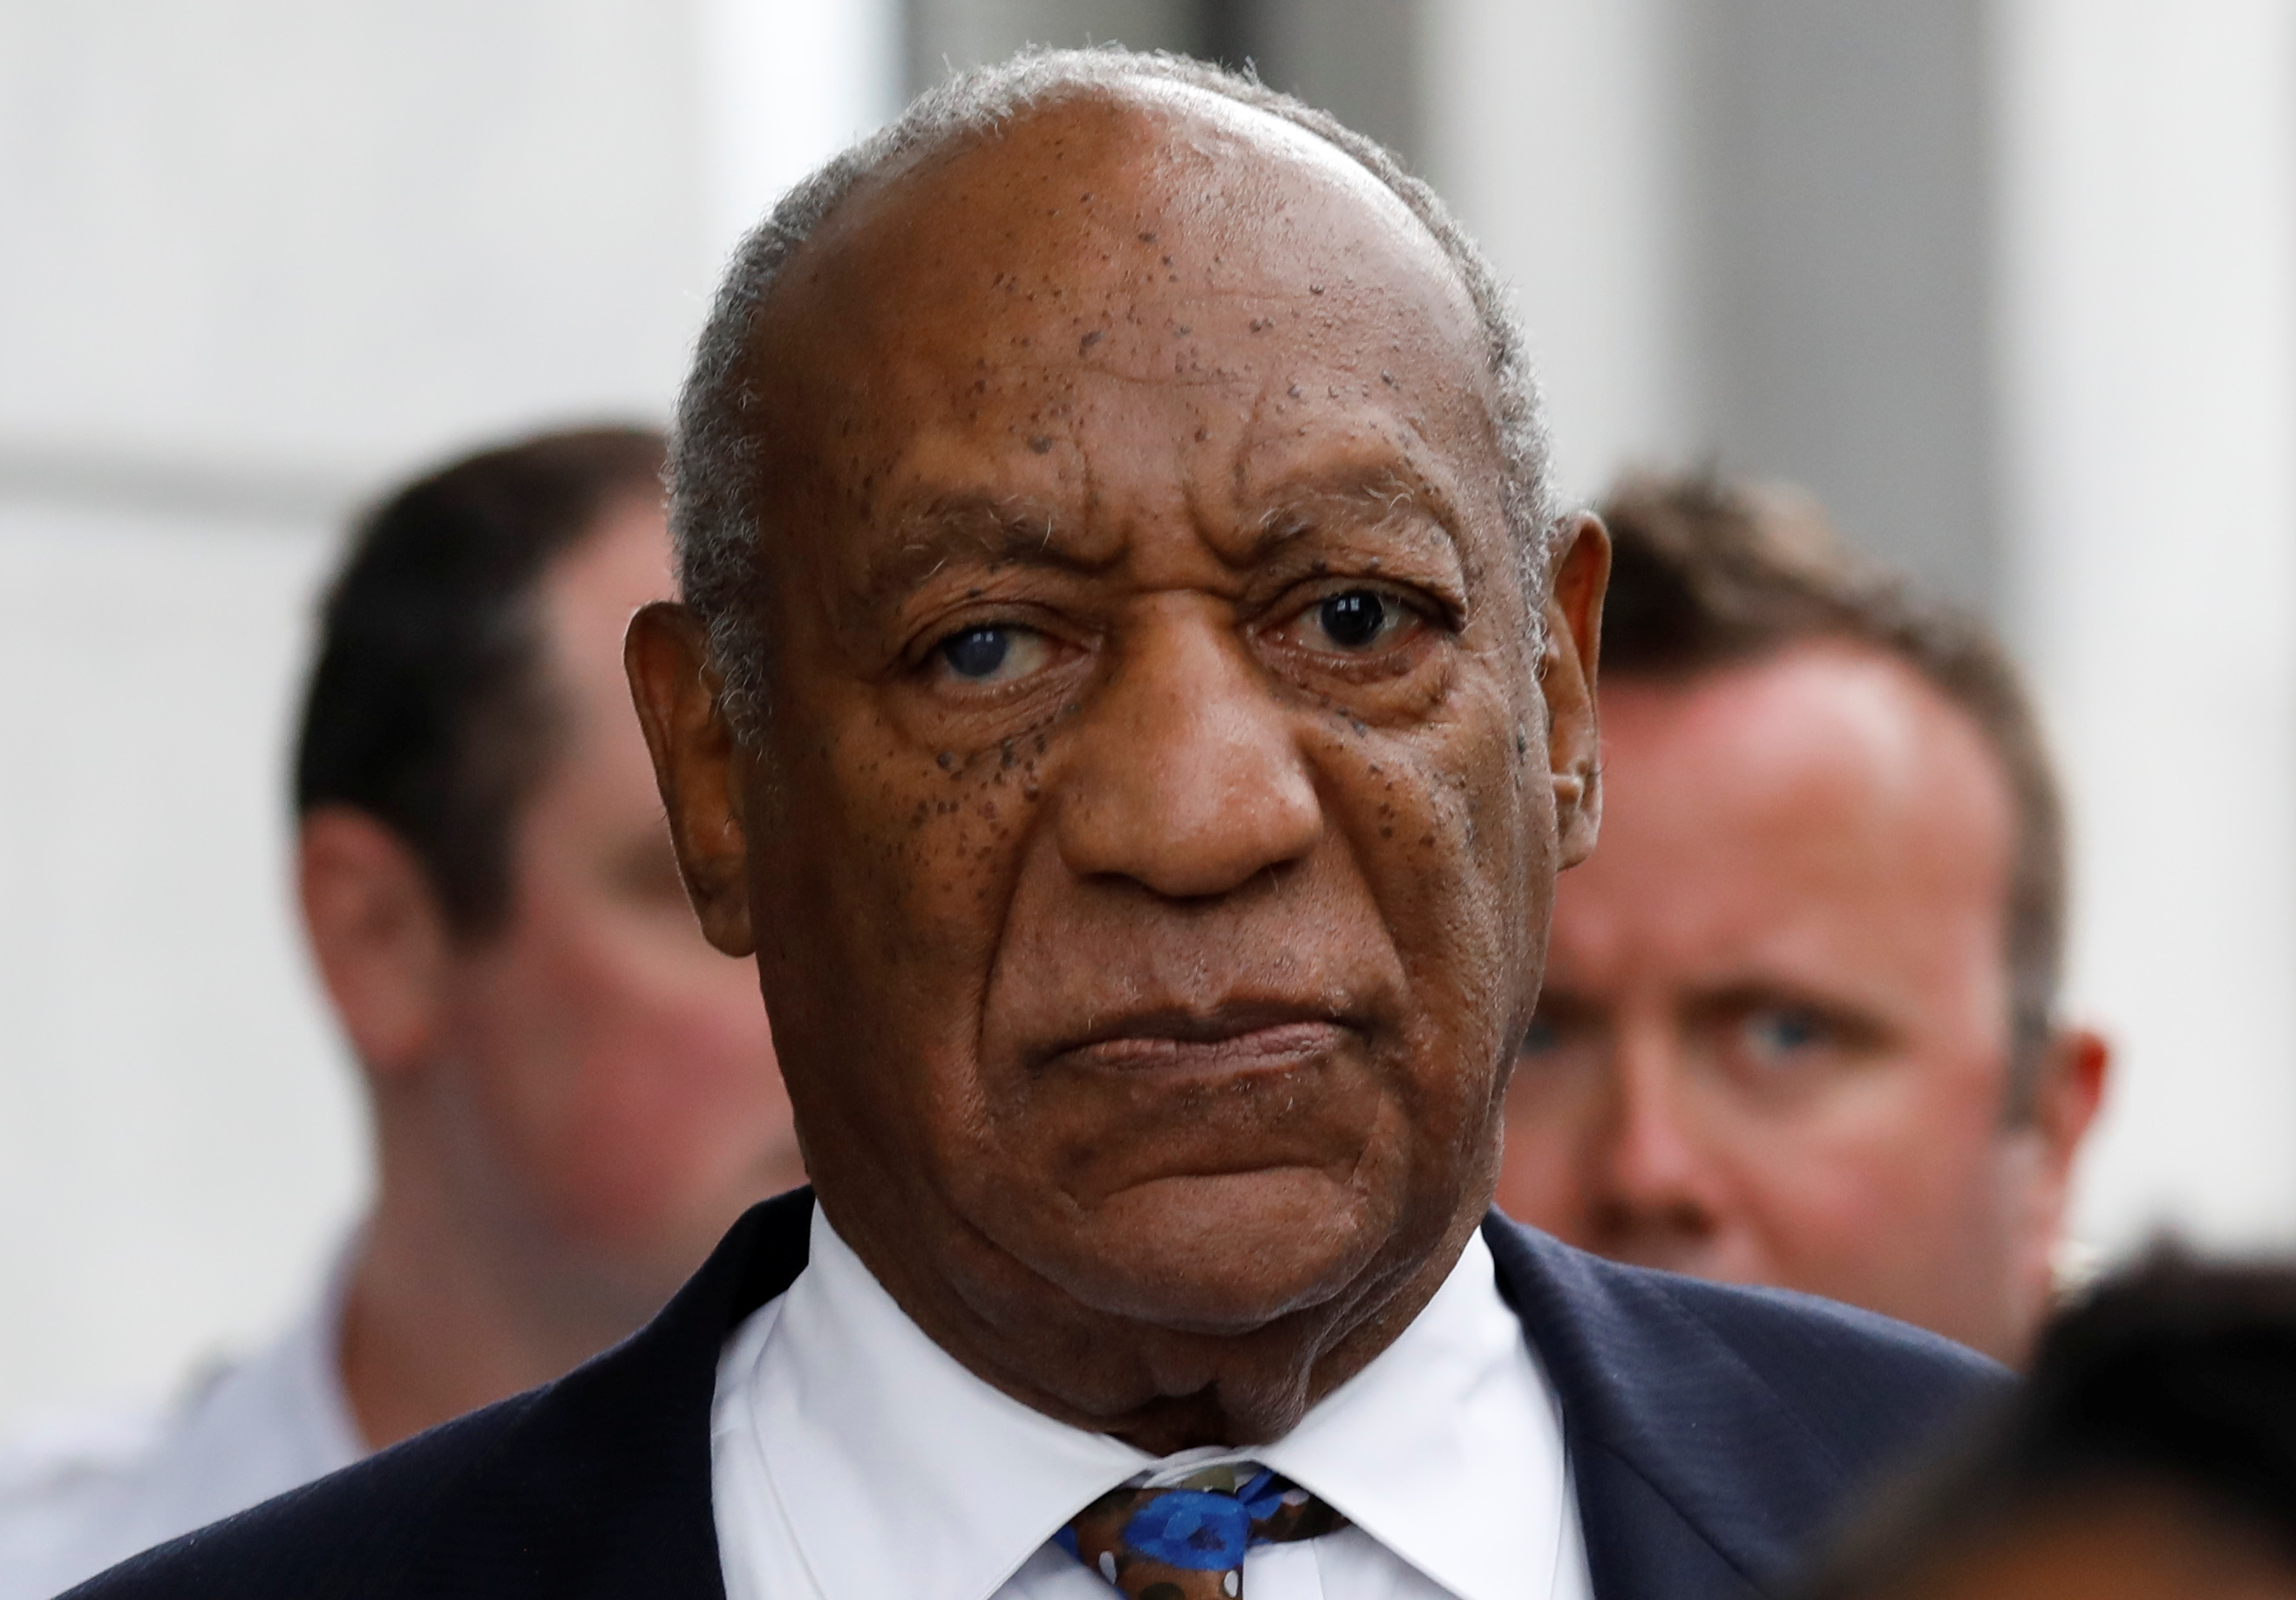 Release of Bill Cosby Sparks Worries It Will Set Back #MeToo Progress